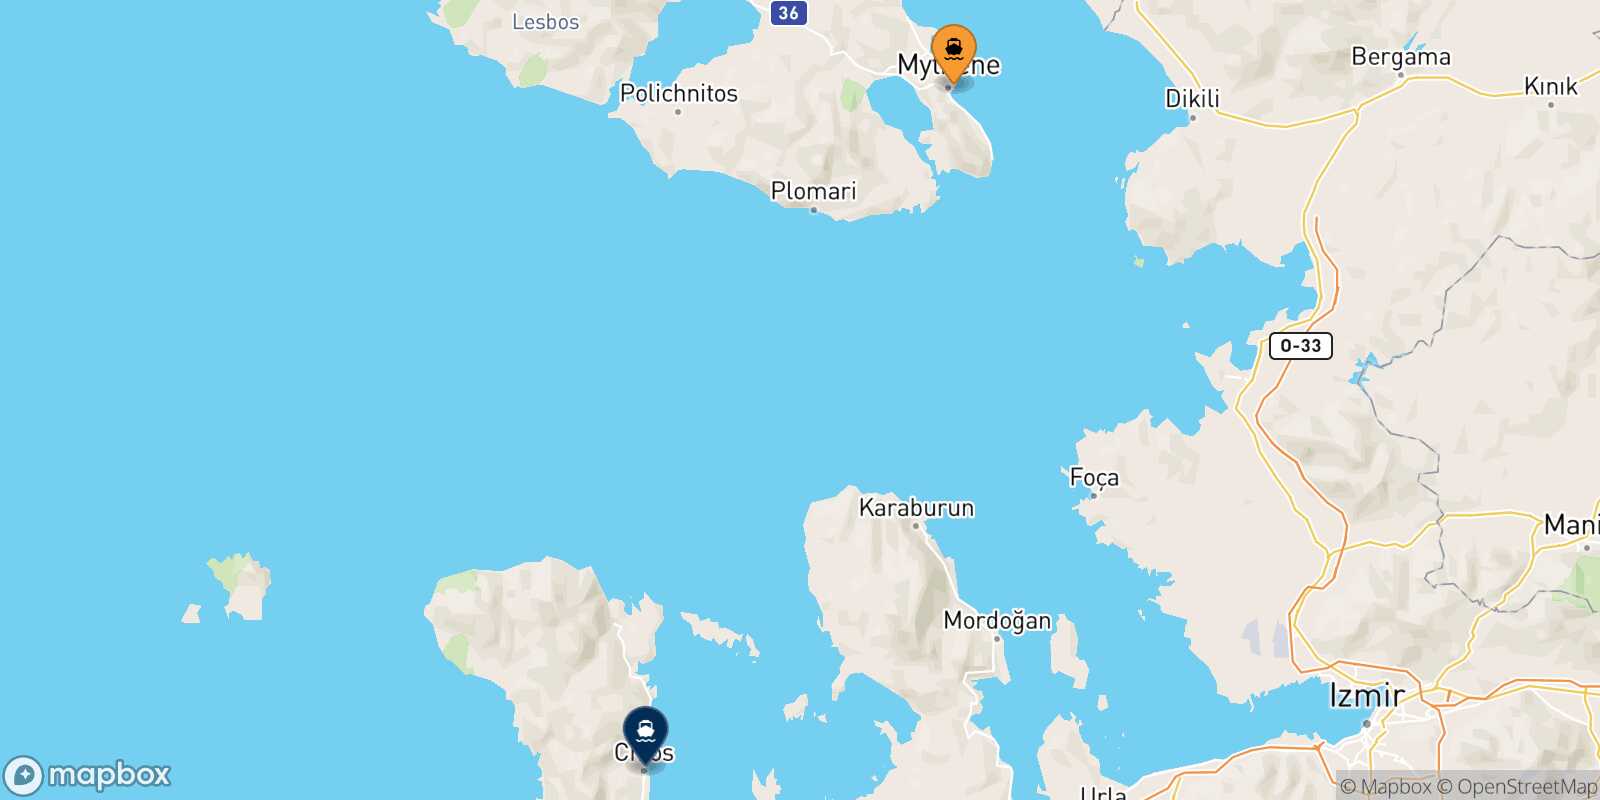 Mytilene (Lesvos) Mesta Chios route map